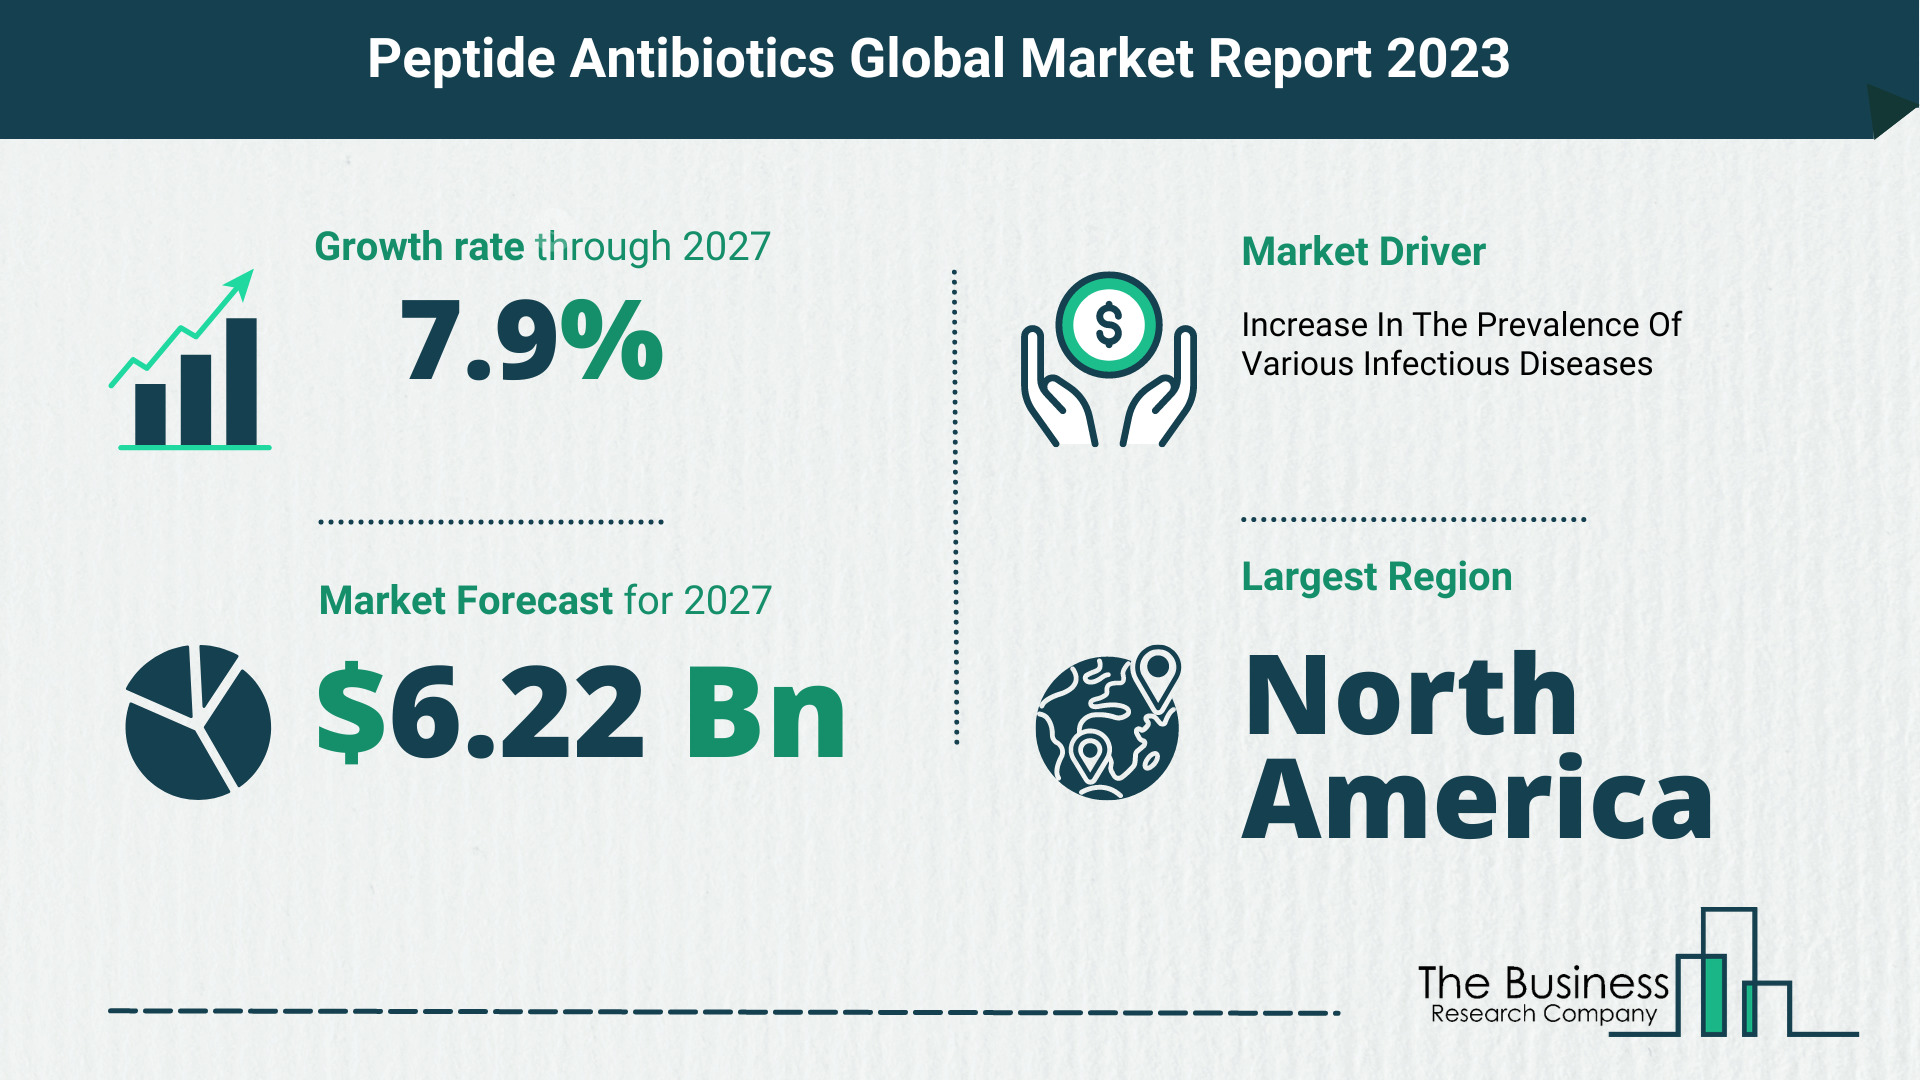 Global Peptide Antibiotics Market